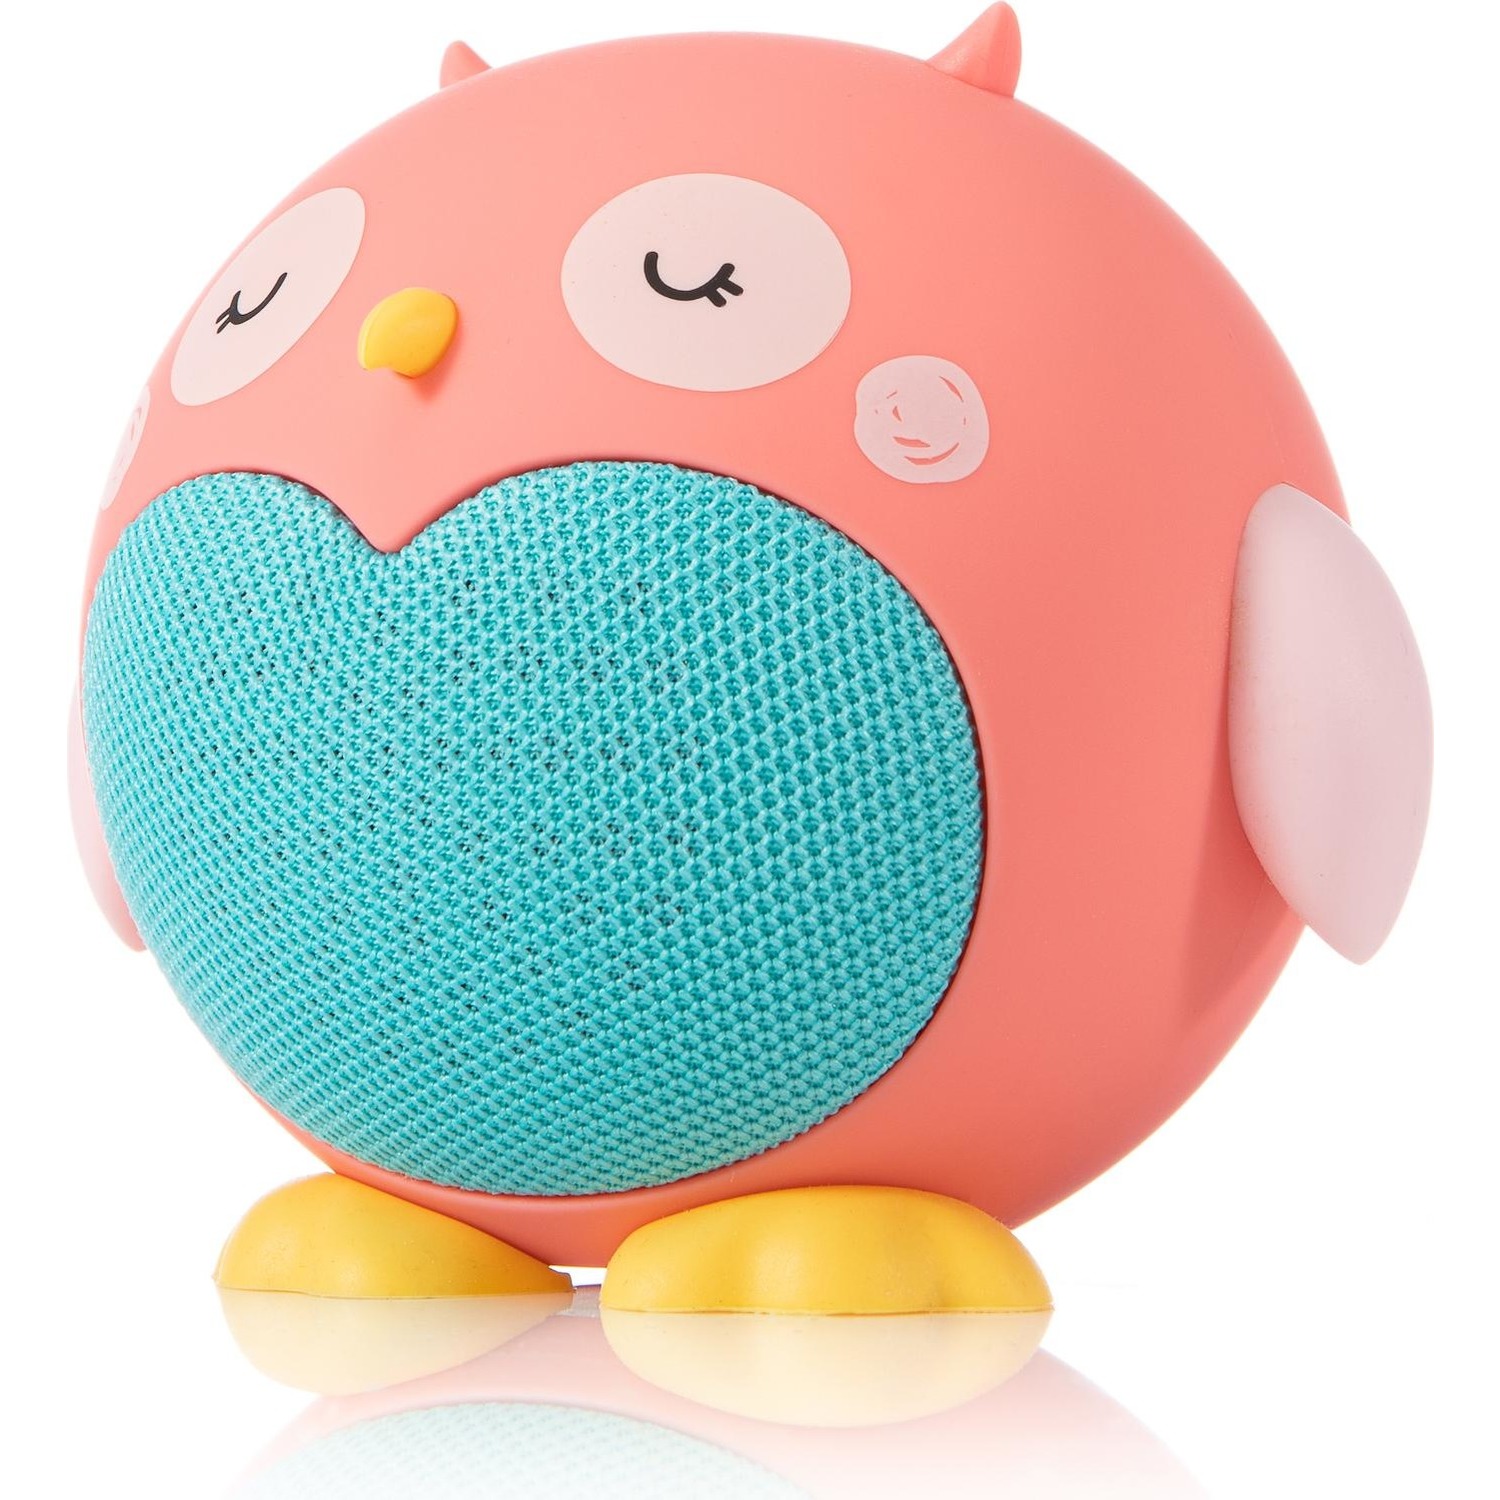 Immagine per Speaker per bambini Planet Buddies Olive the Owl V2 recycled da DIMOStore